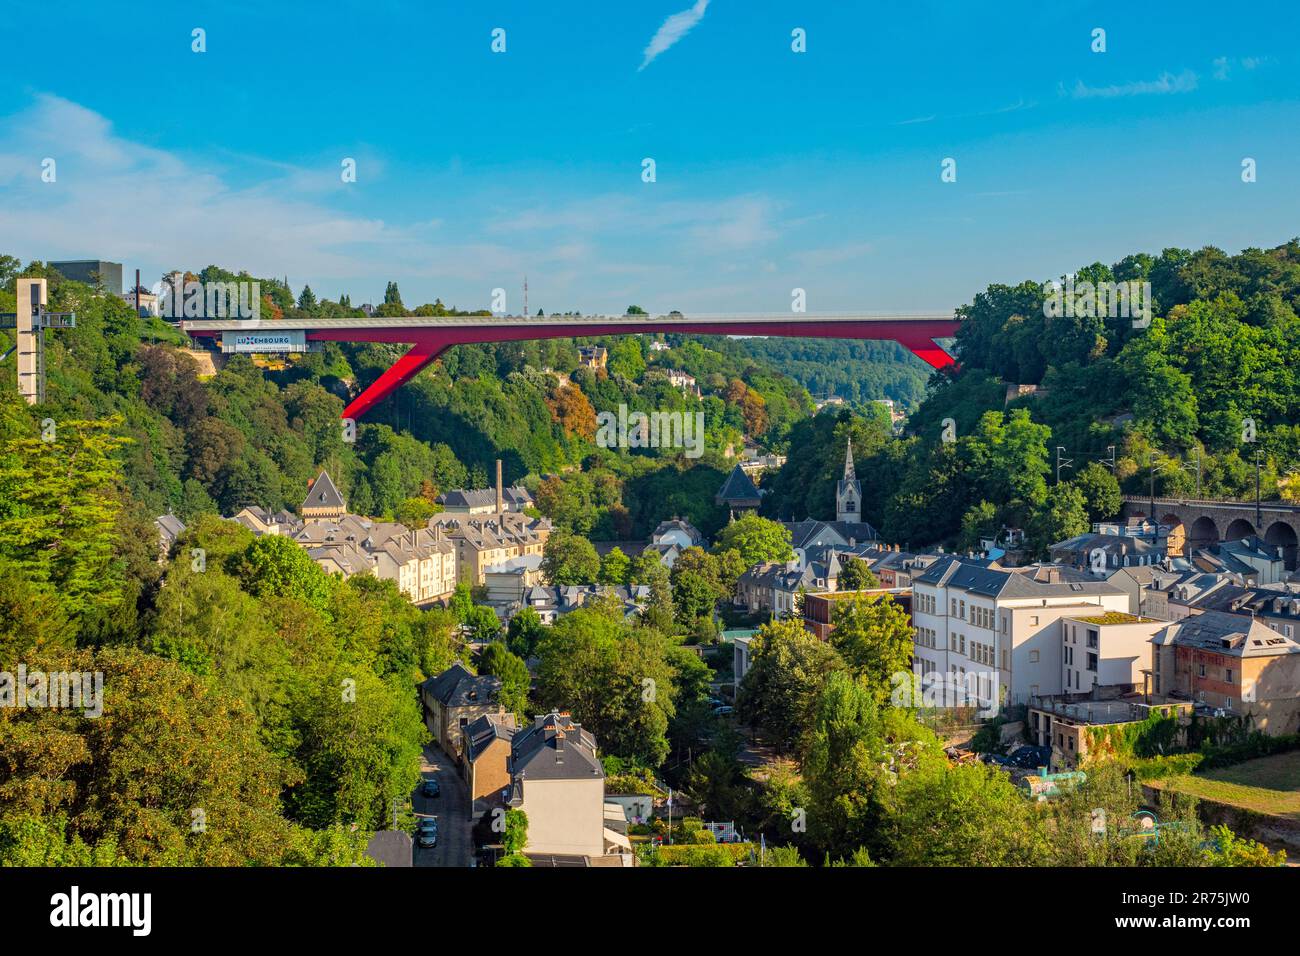 Pfaffenthal et Grand Duchess Charlotte Bridge, Luxembourg City, Benelux, pays du Benelux, Luxembourg Banque D'Images